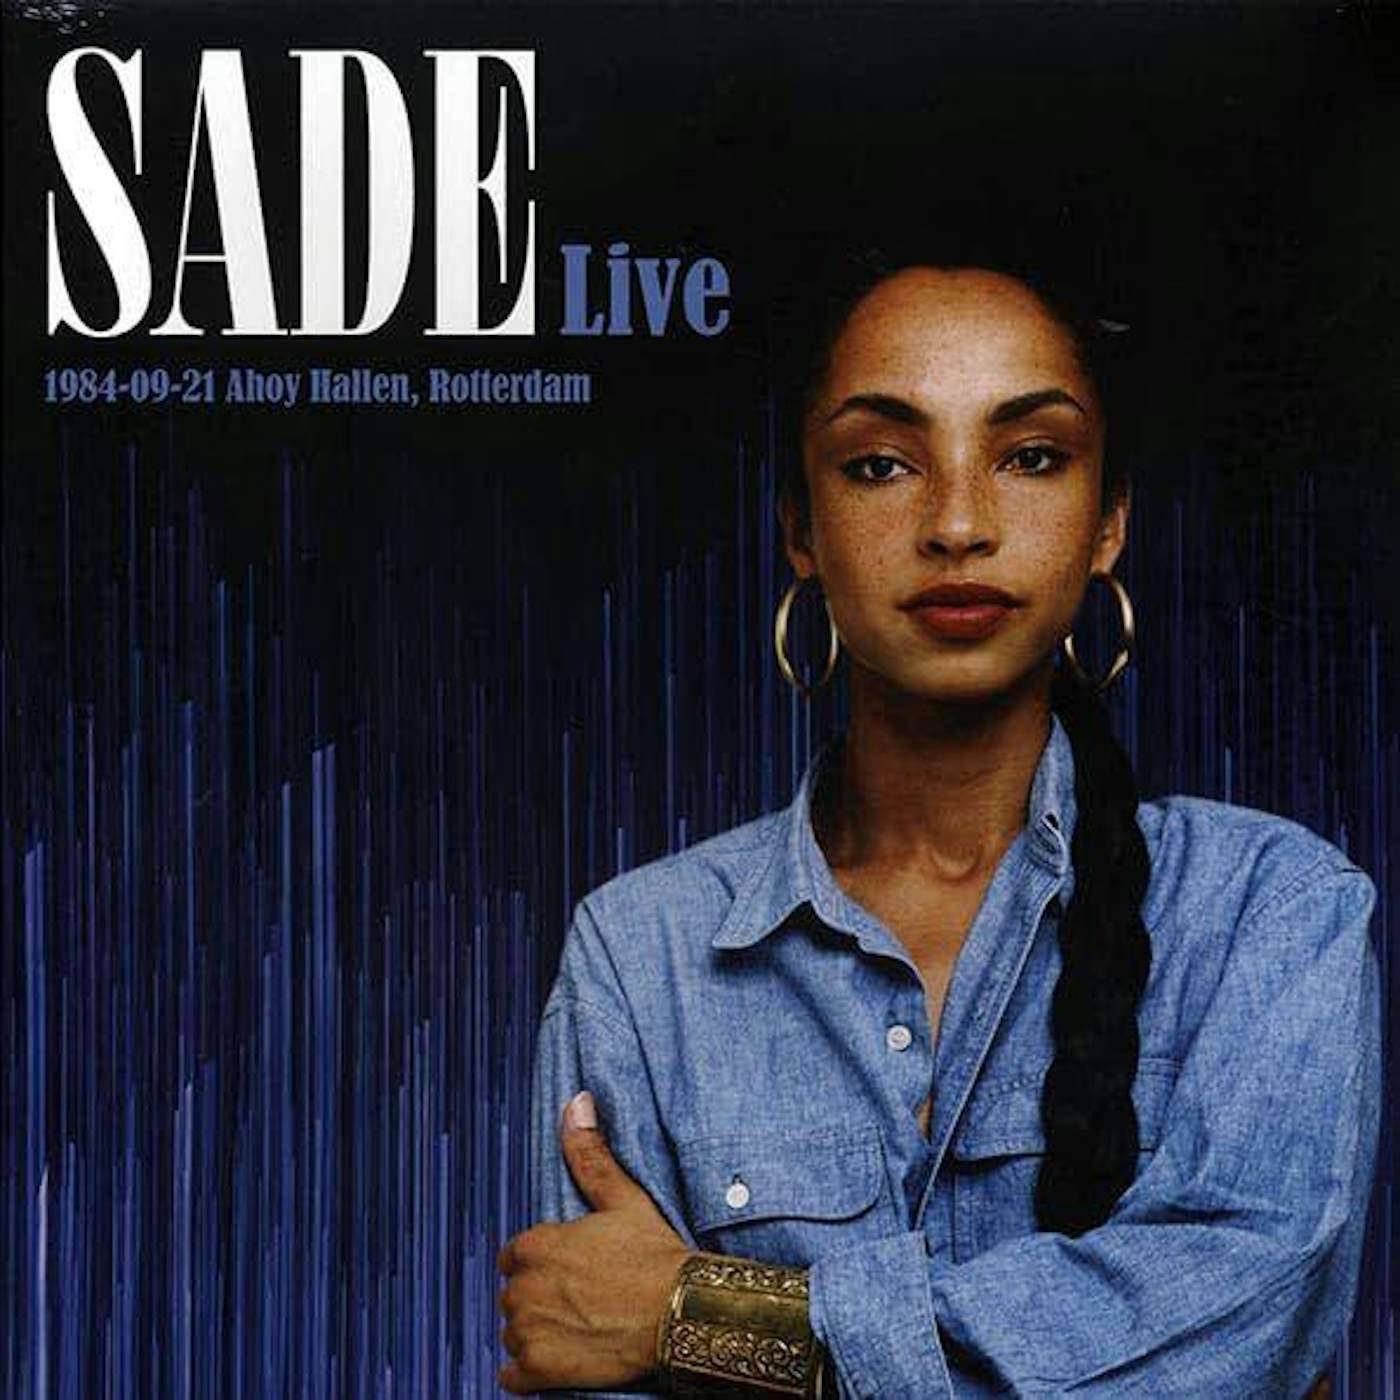 Sade Live: 1984-09-21 Ahoy Hallen, Rotterdam (2LP) Vinyl Record